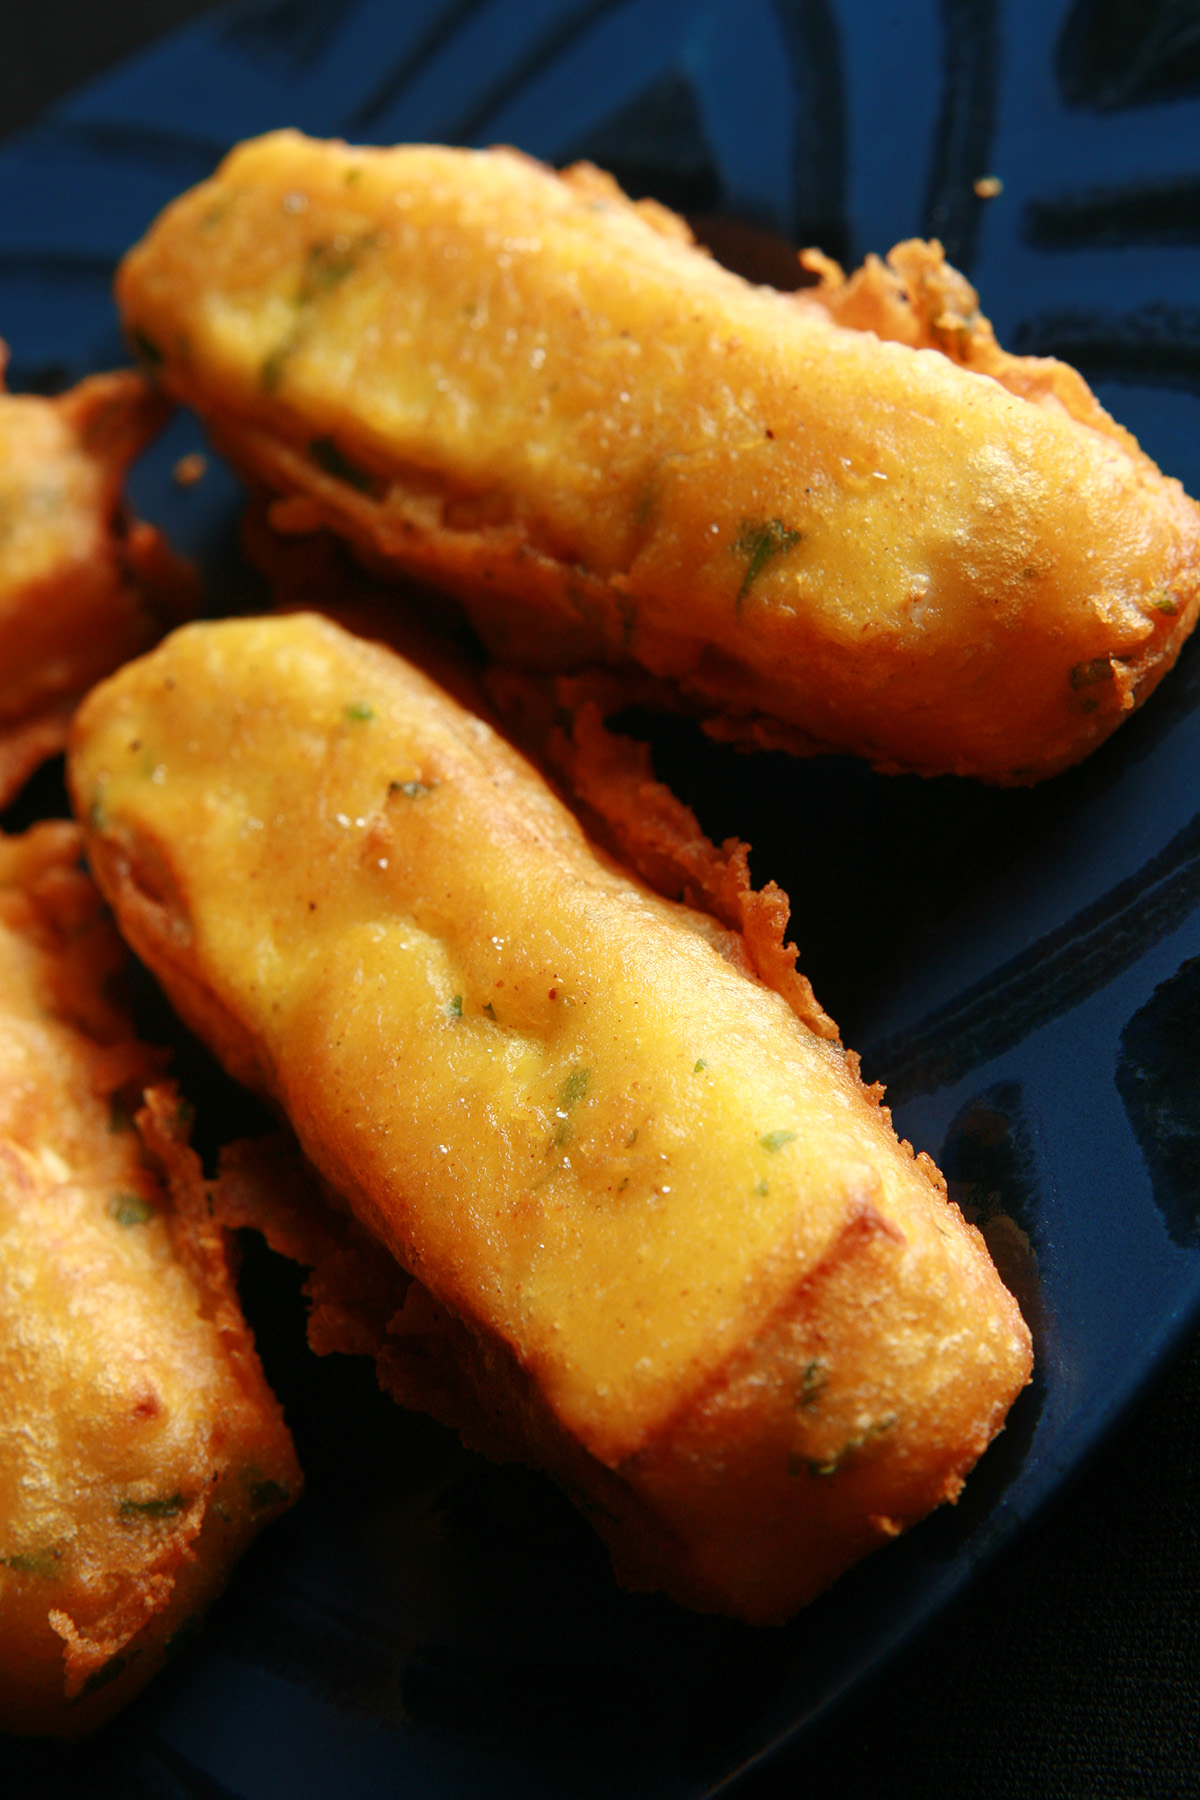 Several sticks of gluten-free paneer pakora - deep fried cheese sticks - on a blue plate.